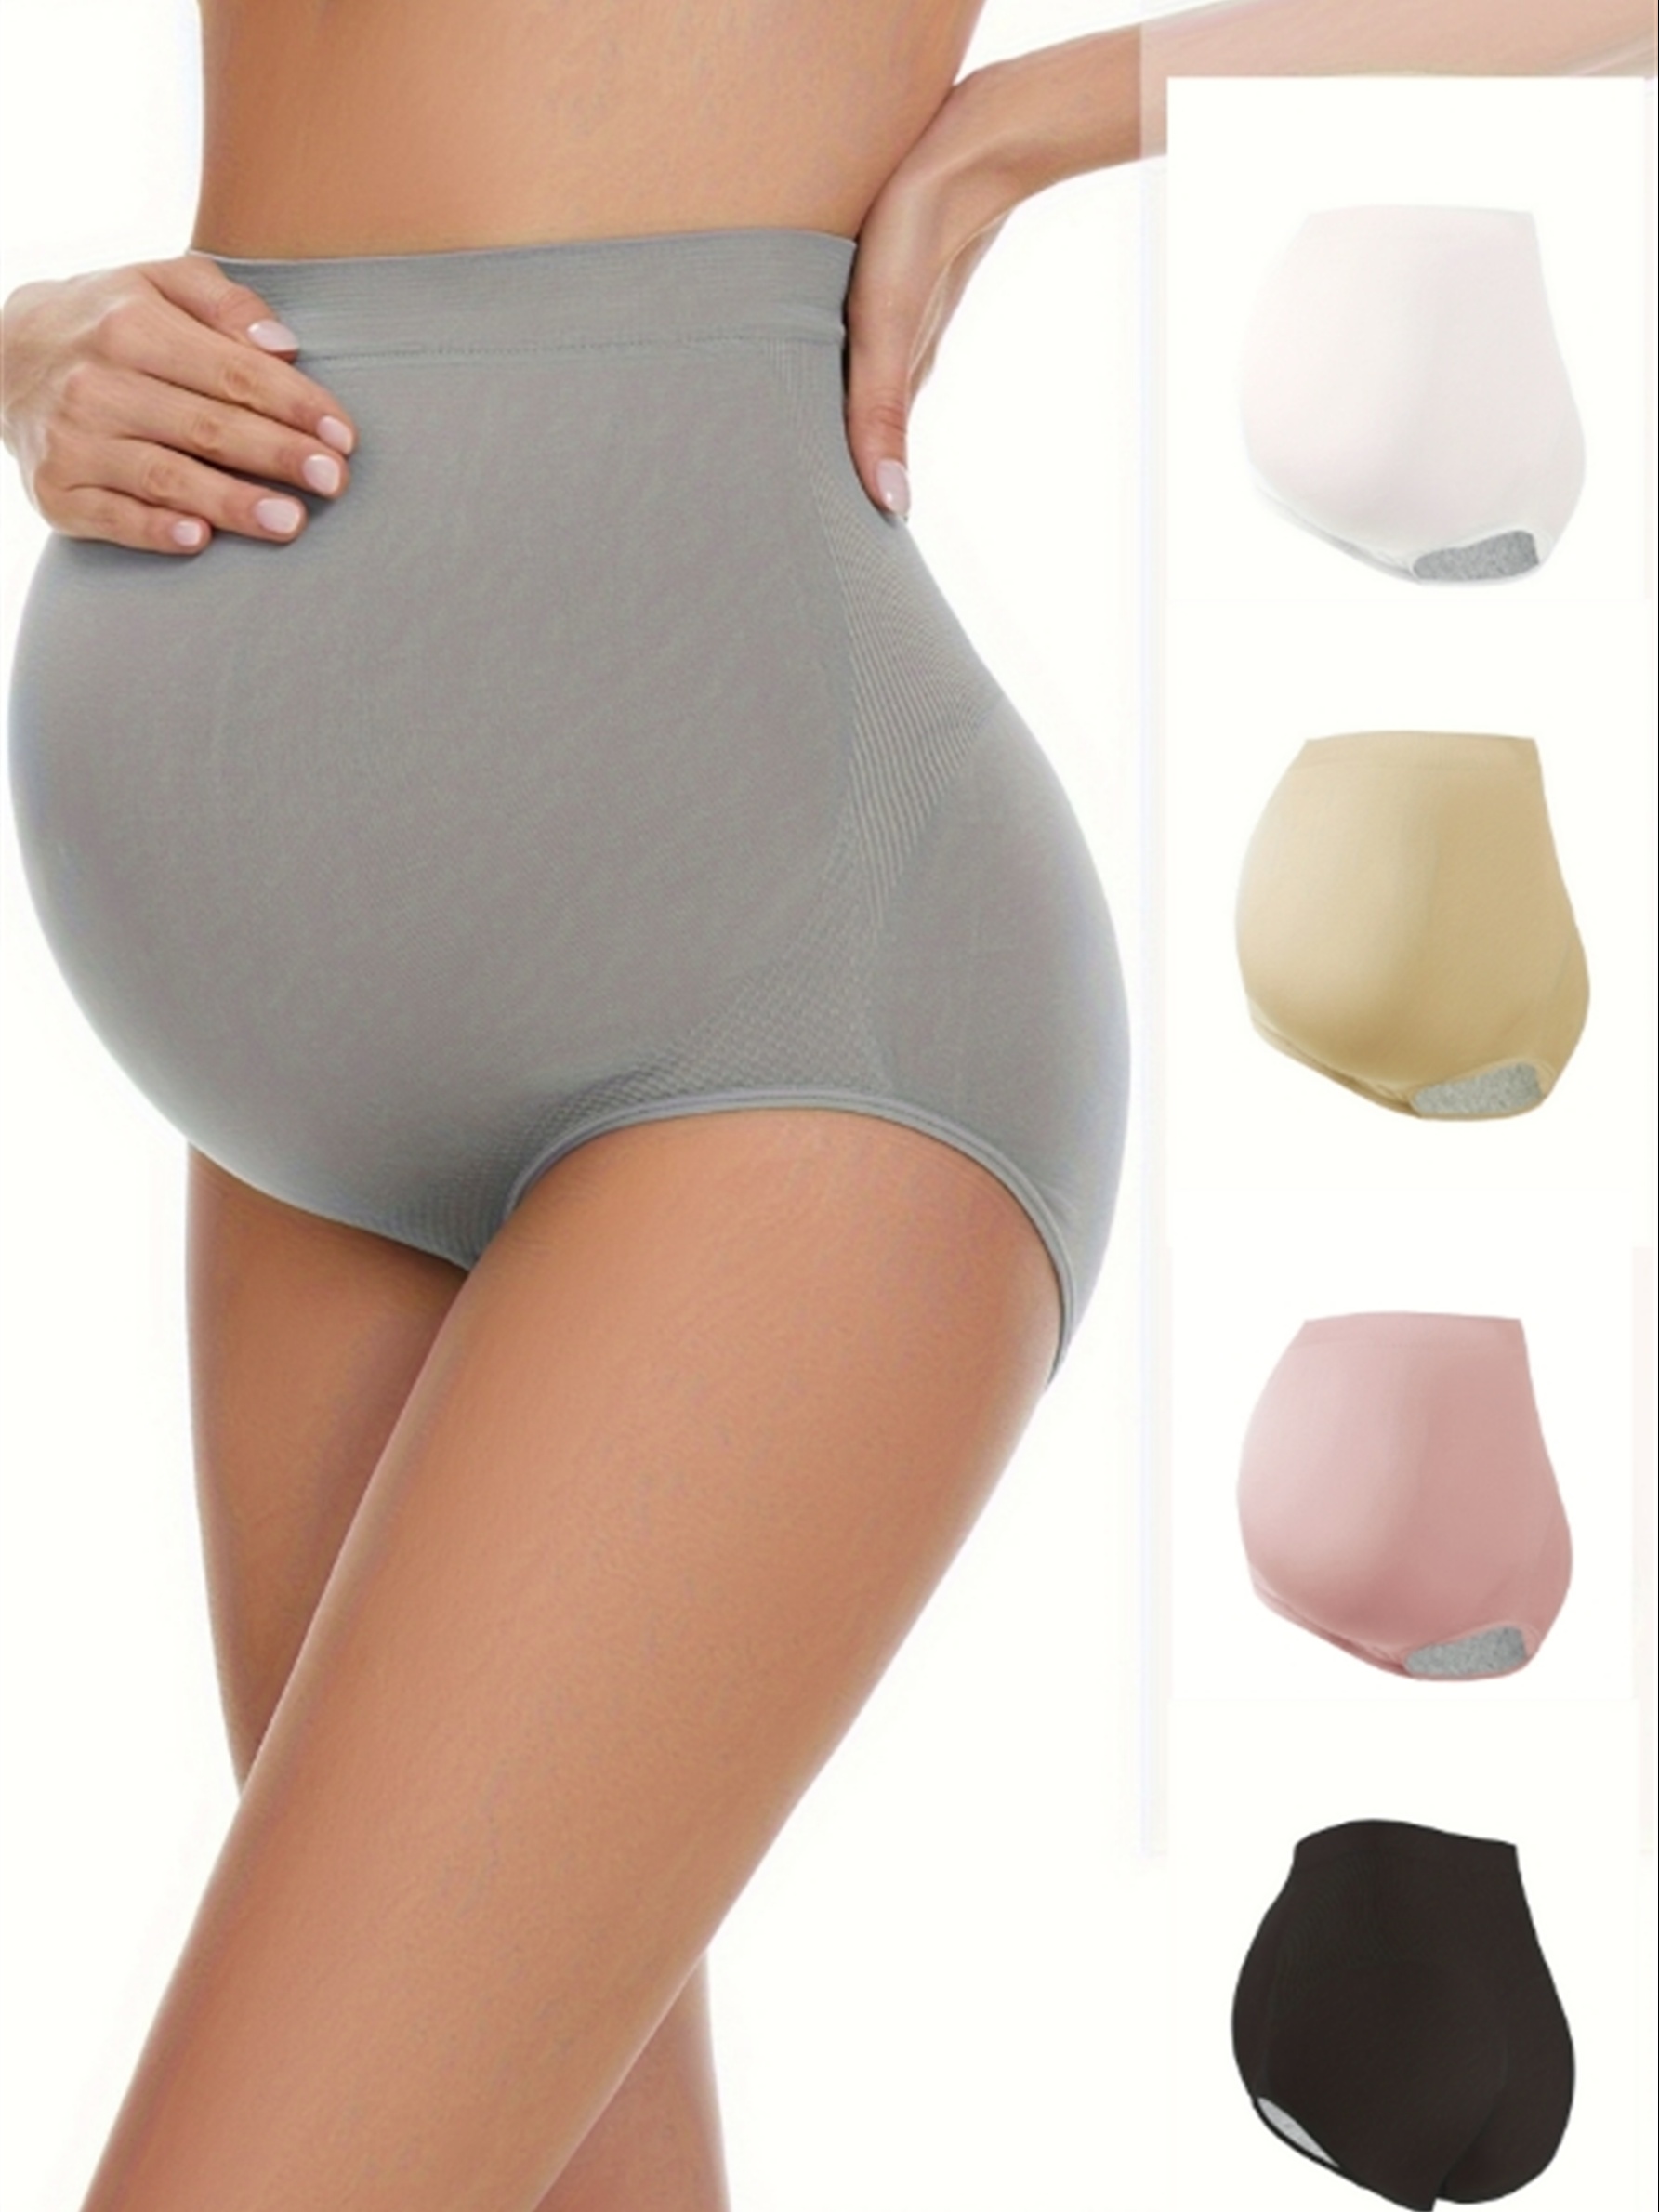 Clothing Underwear Woman Pregnant